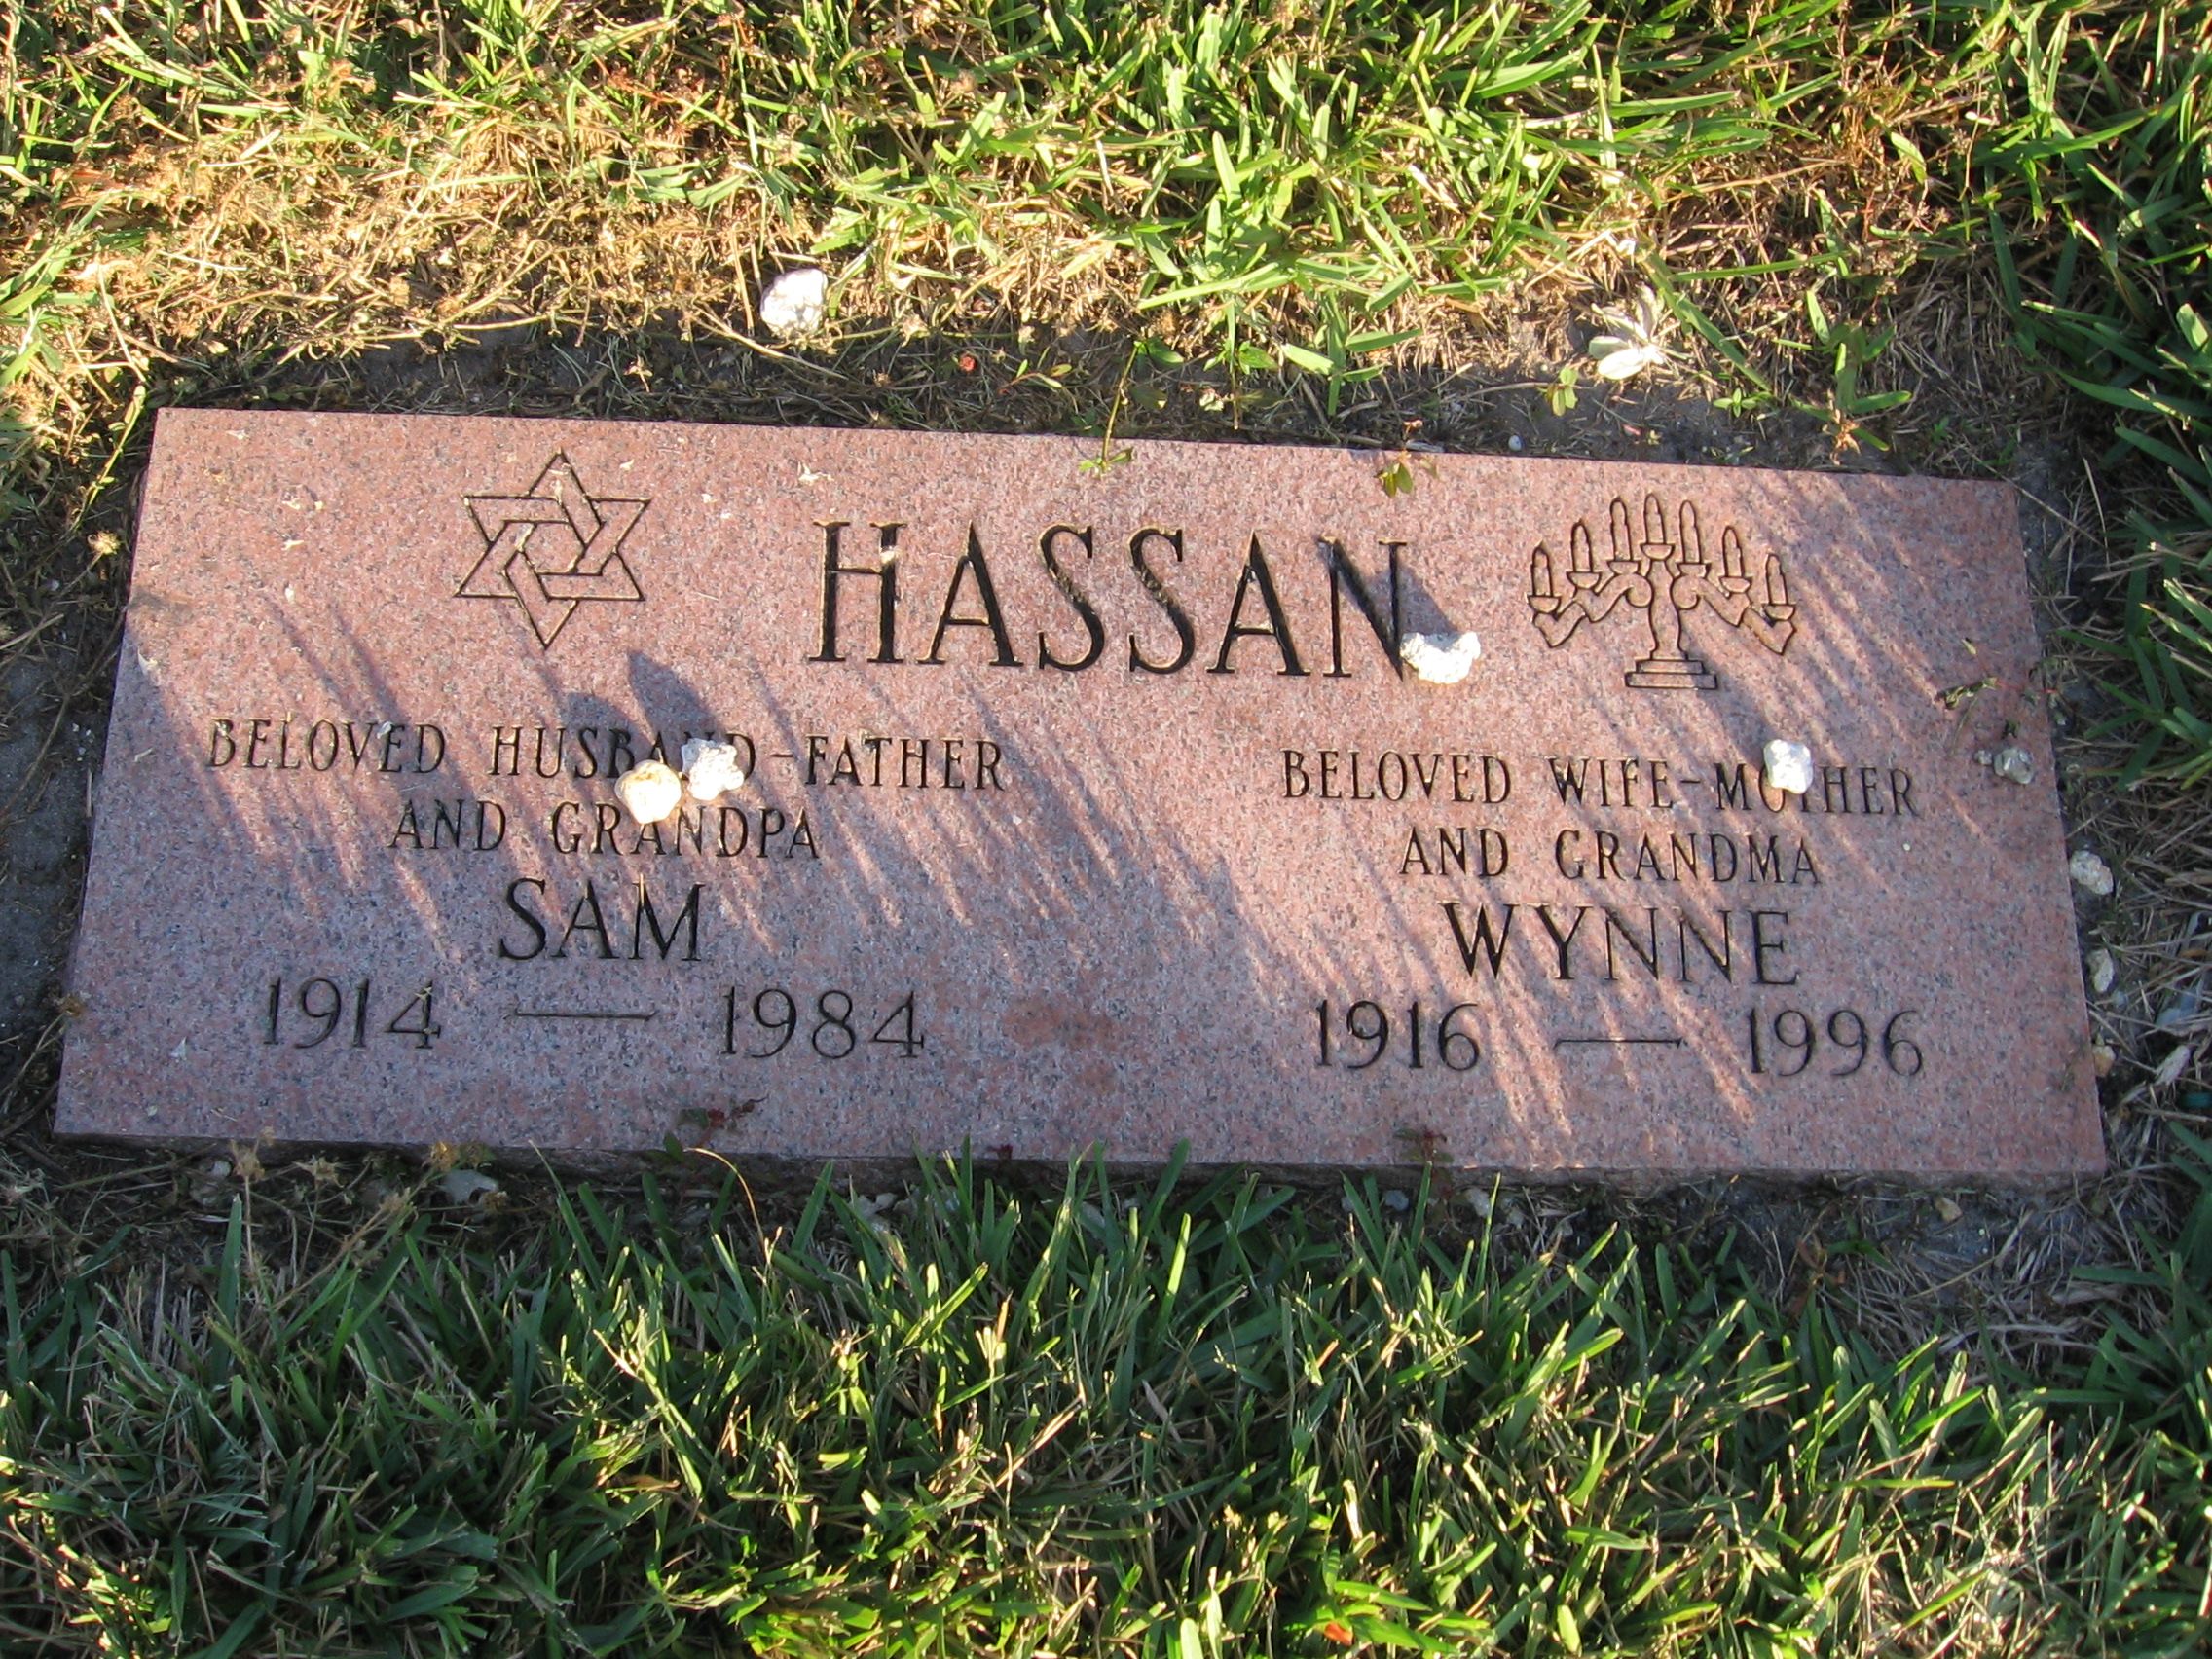 Sam Hassan